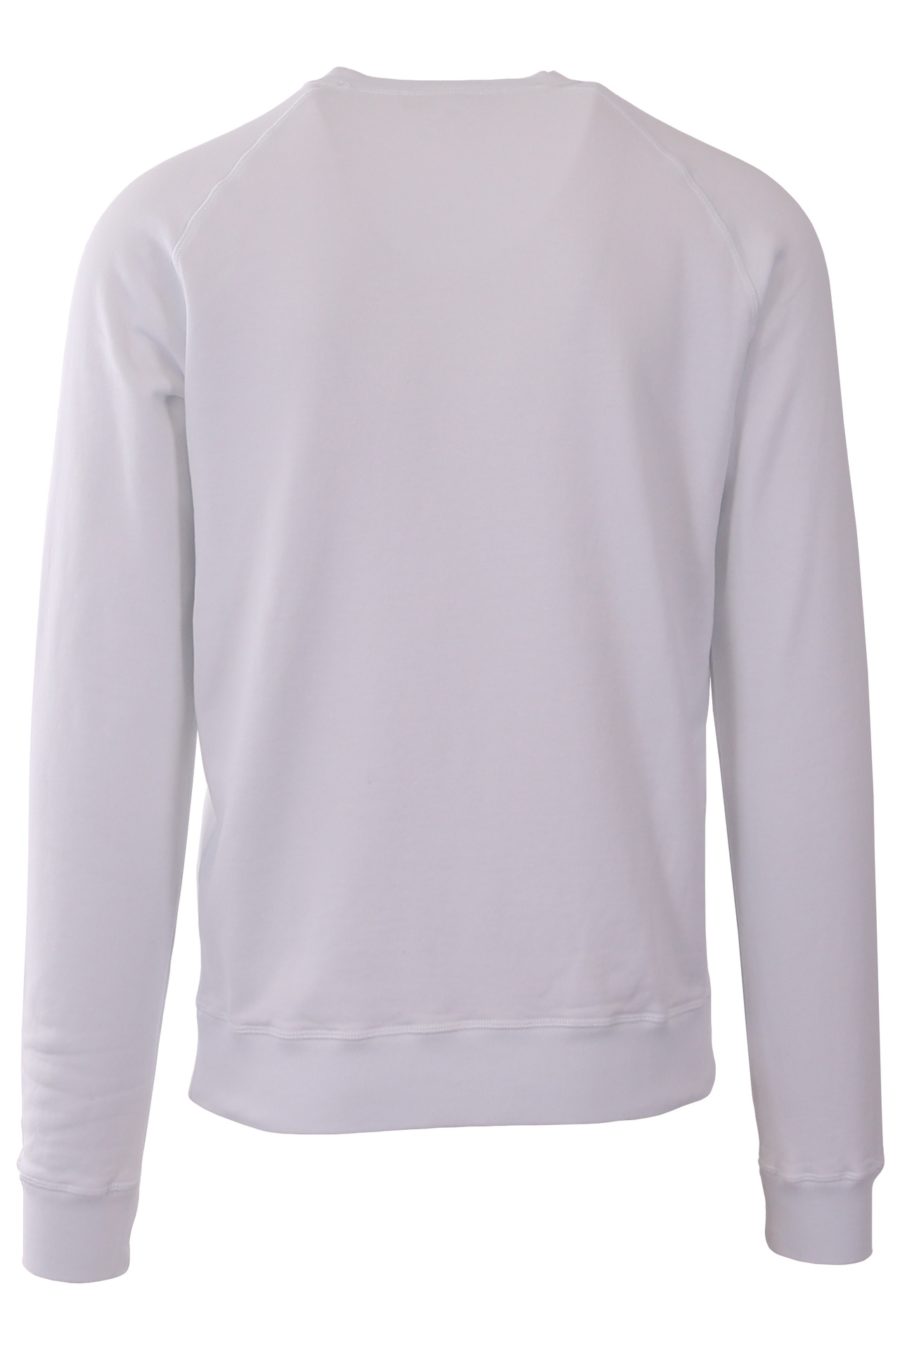 Sweatshirt Dsquared2 blanc avec logo noir - 1f63644b342645e9644dcf29c6506cd1a220c0cf